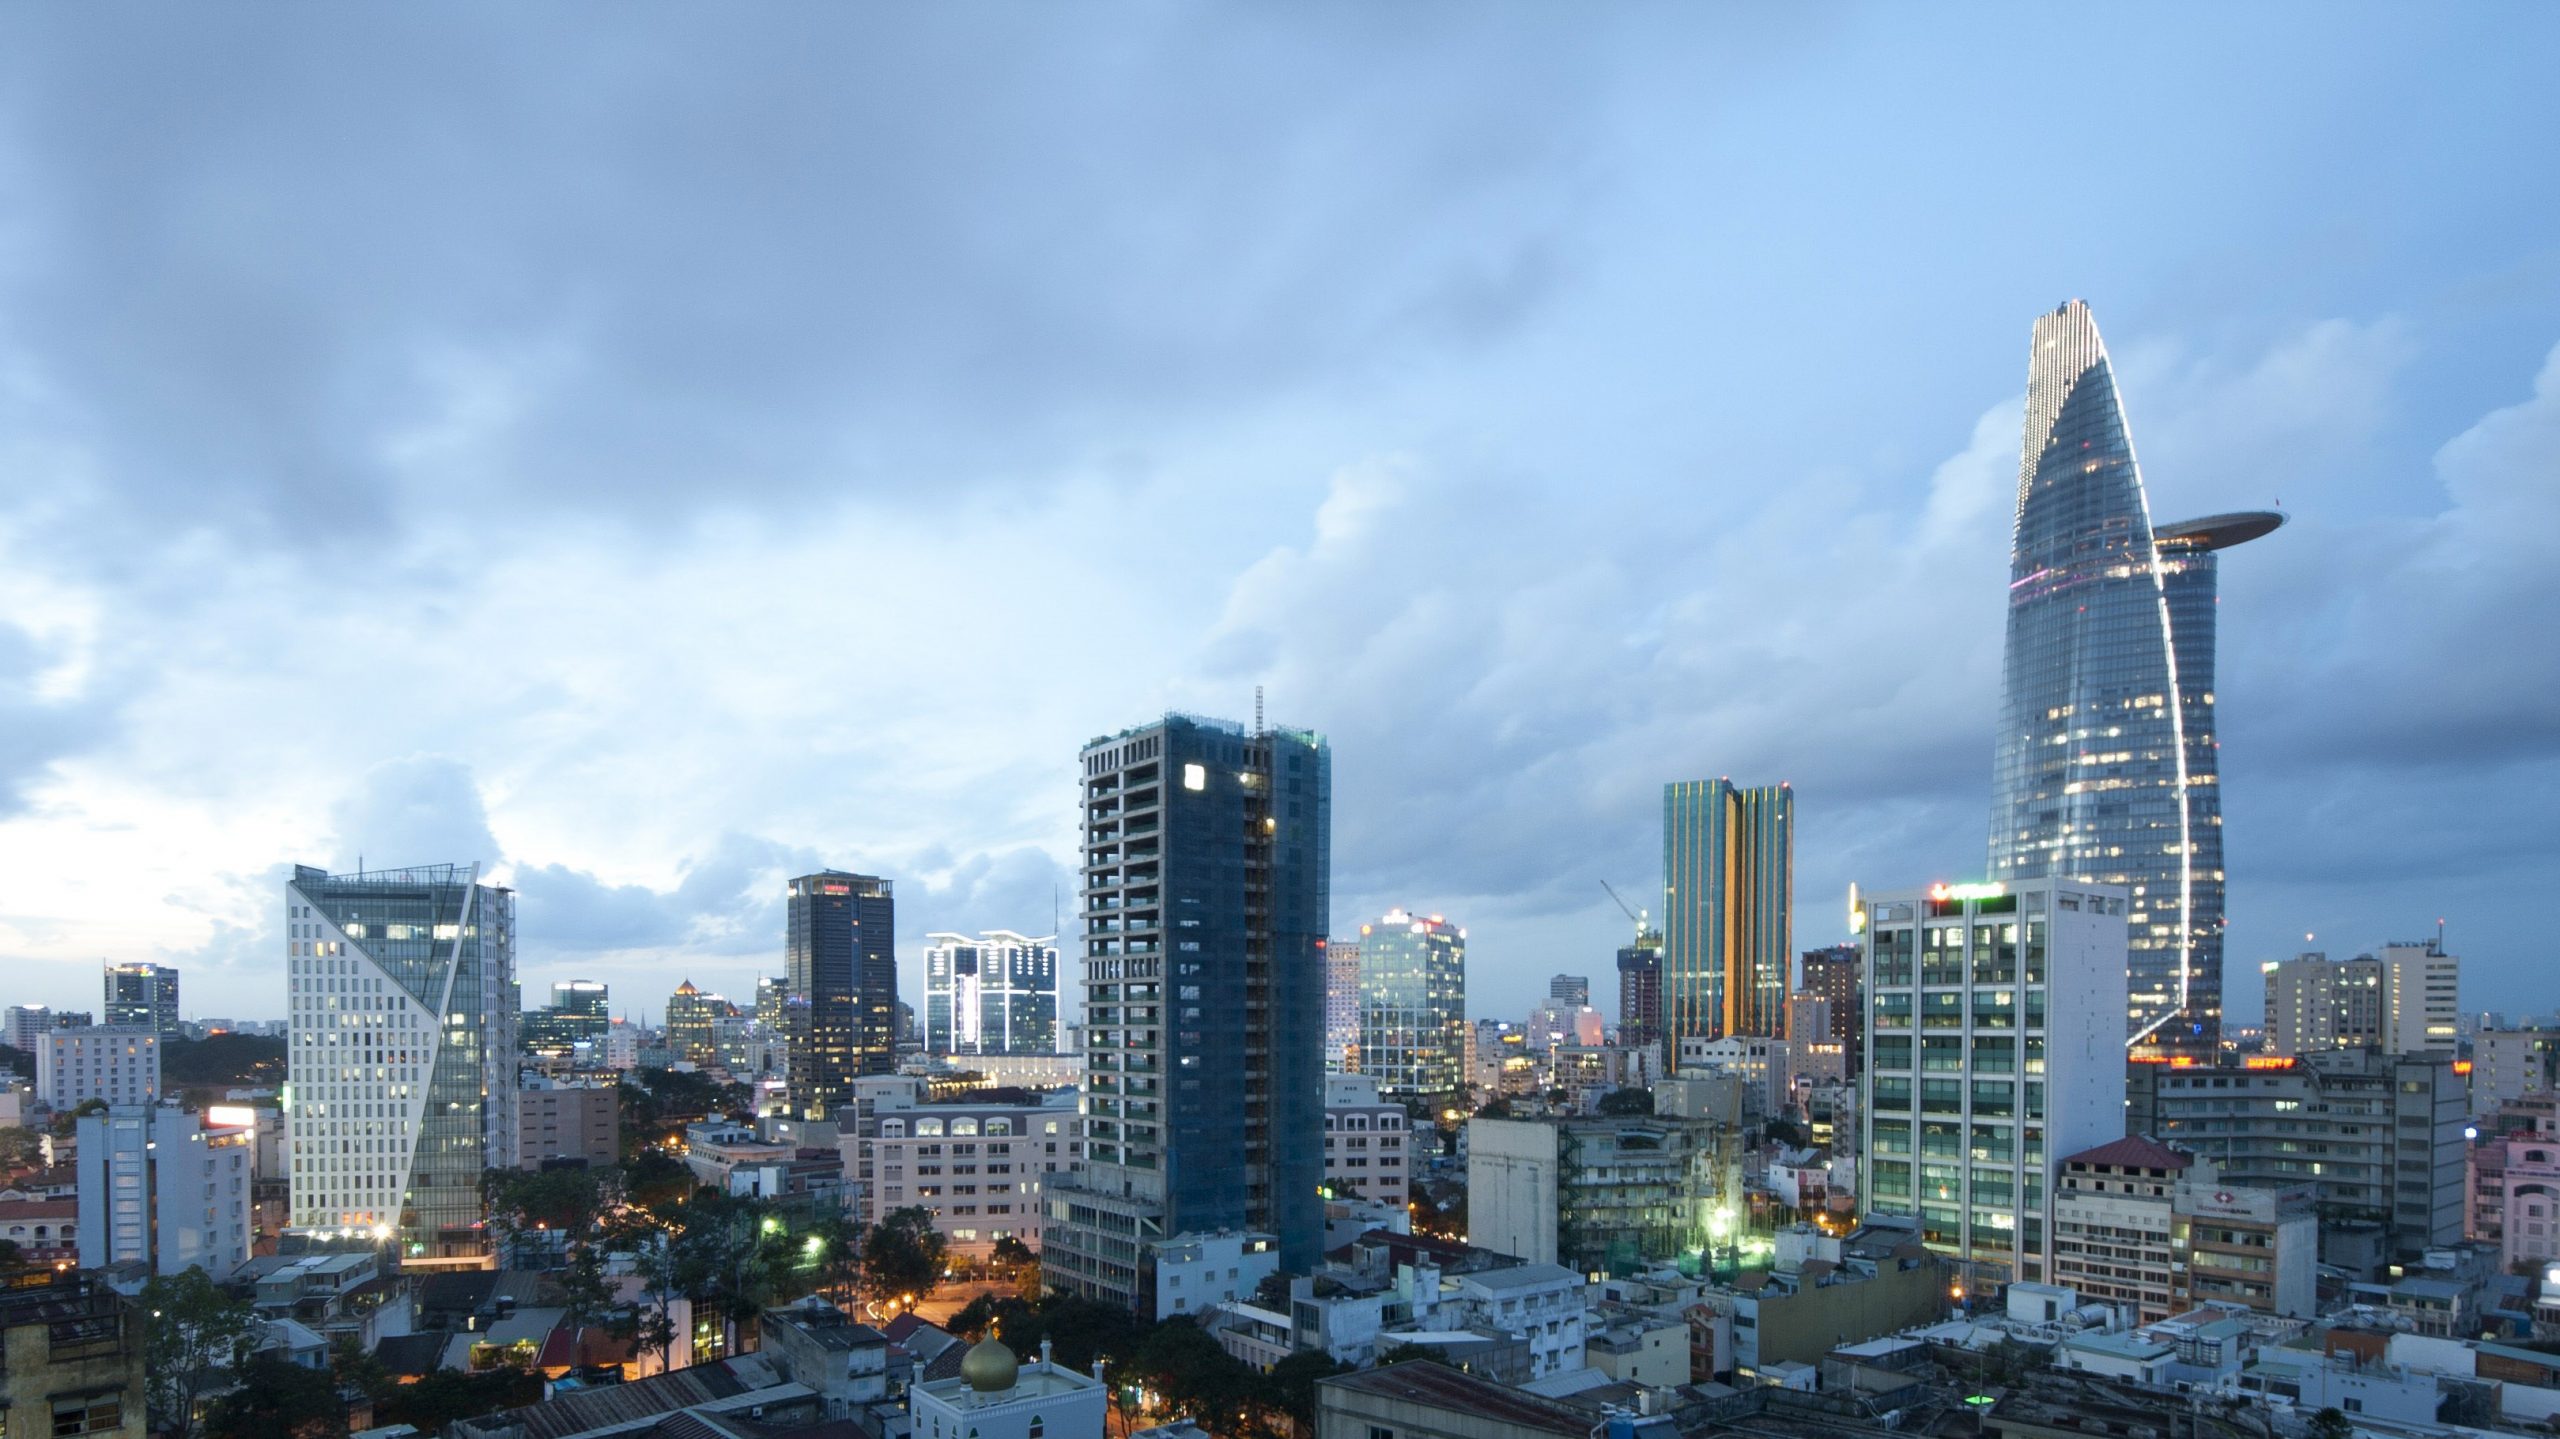 Skyline and cityscape in Saigon, Vietnam